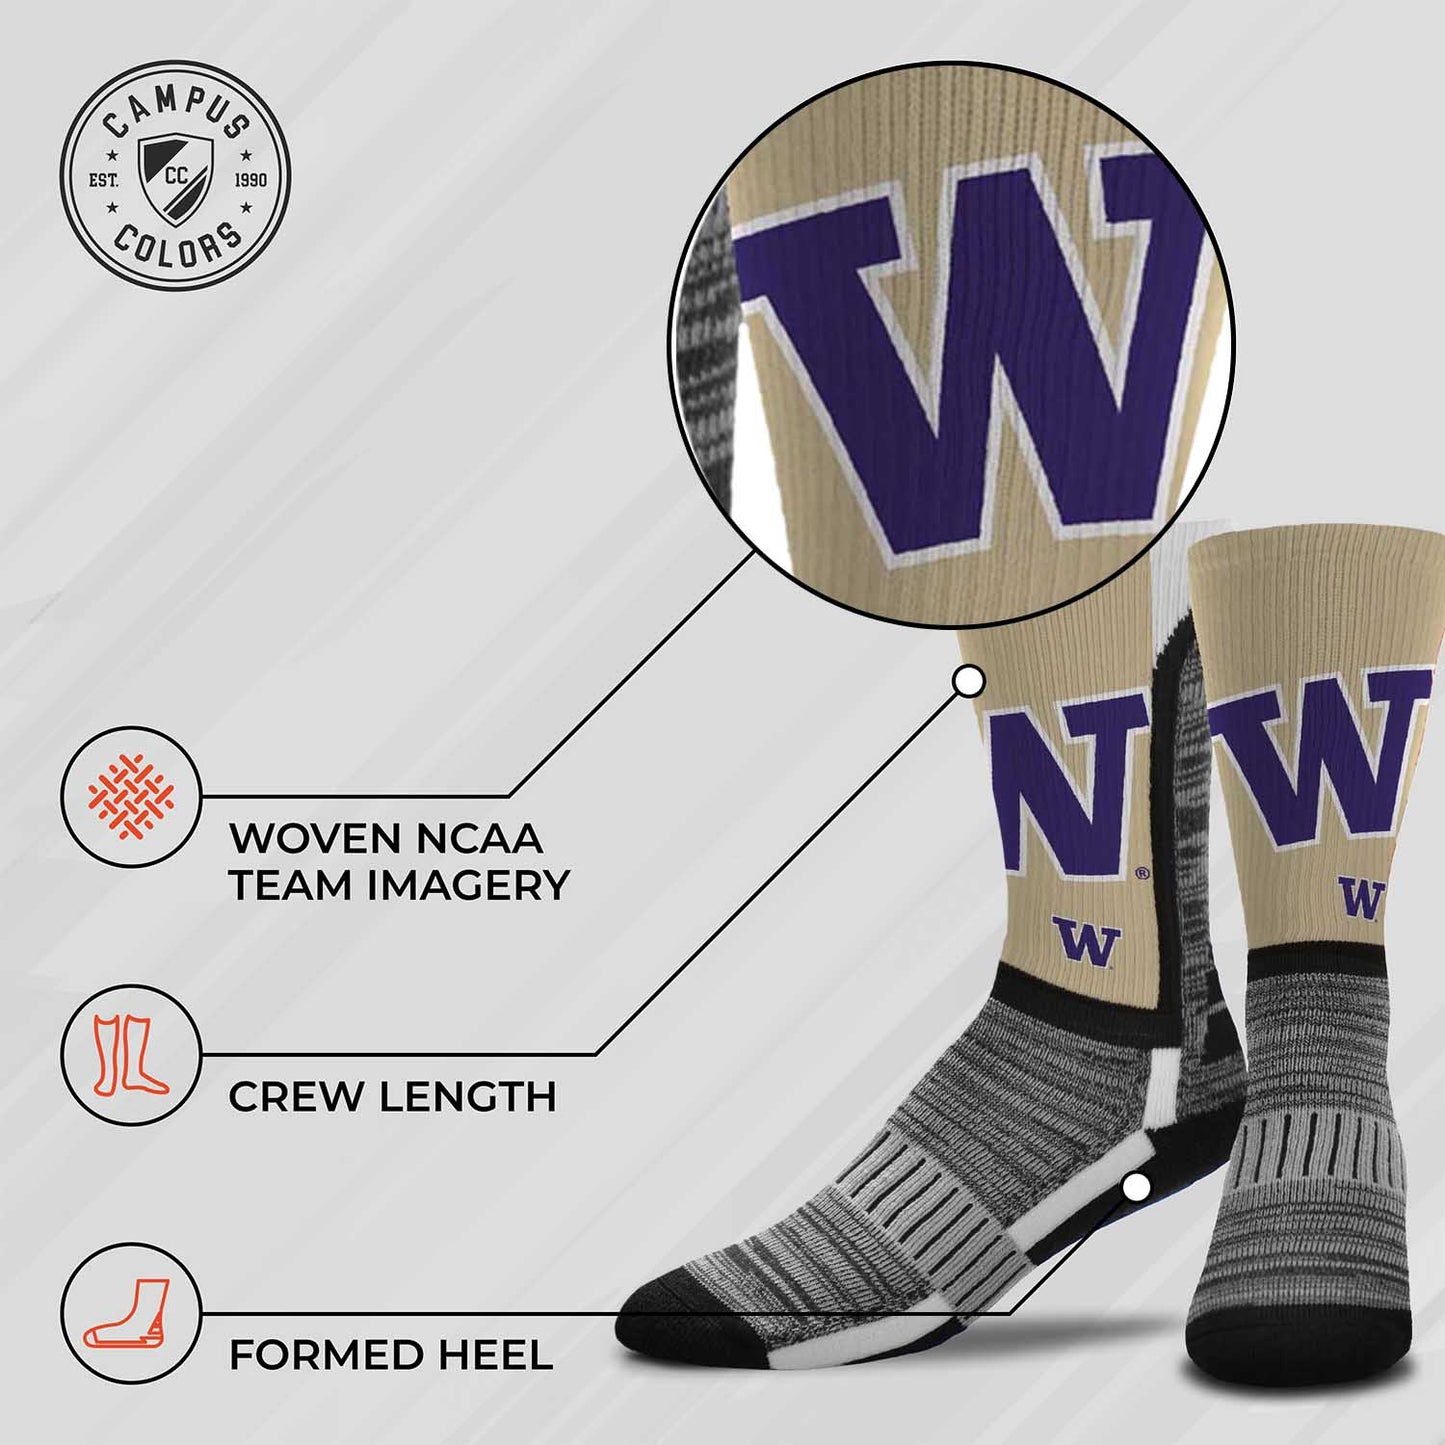 Washington Huskies NCAA Youth University Socks - Team Color